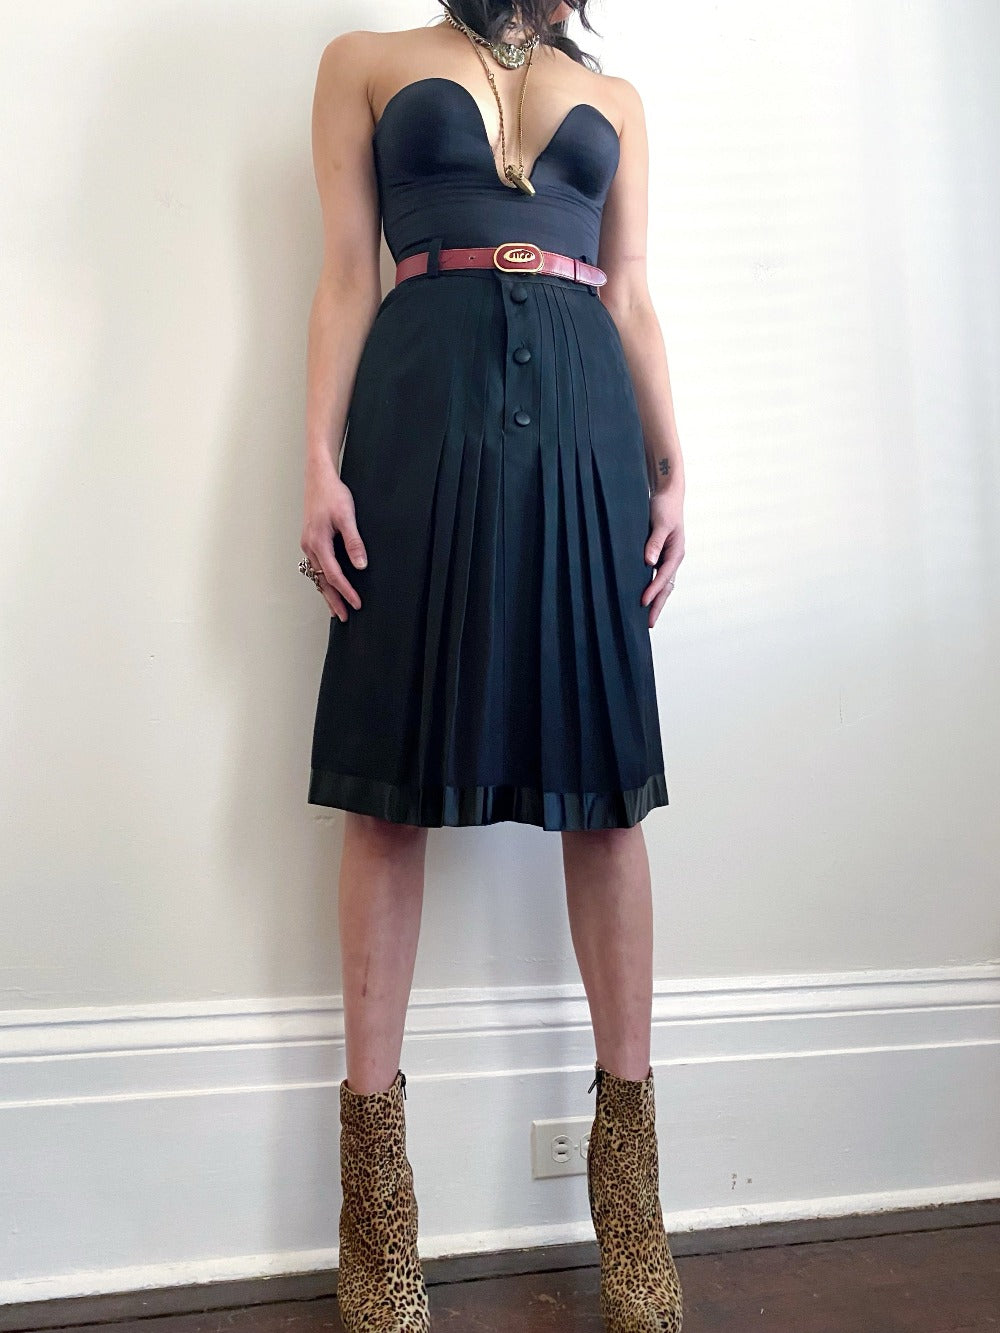 Vintage Yves Saint Laurent Skirt Medium/28 Waist